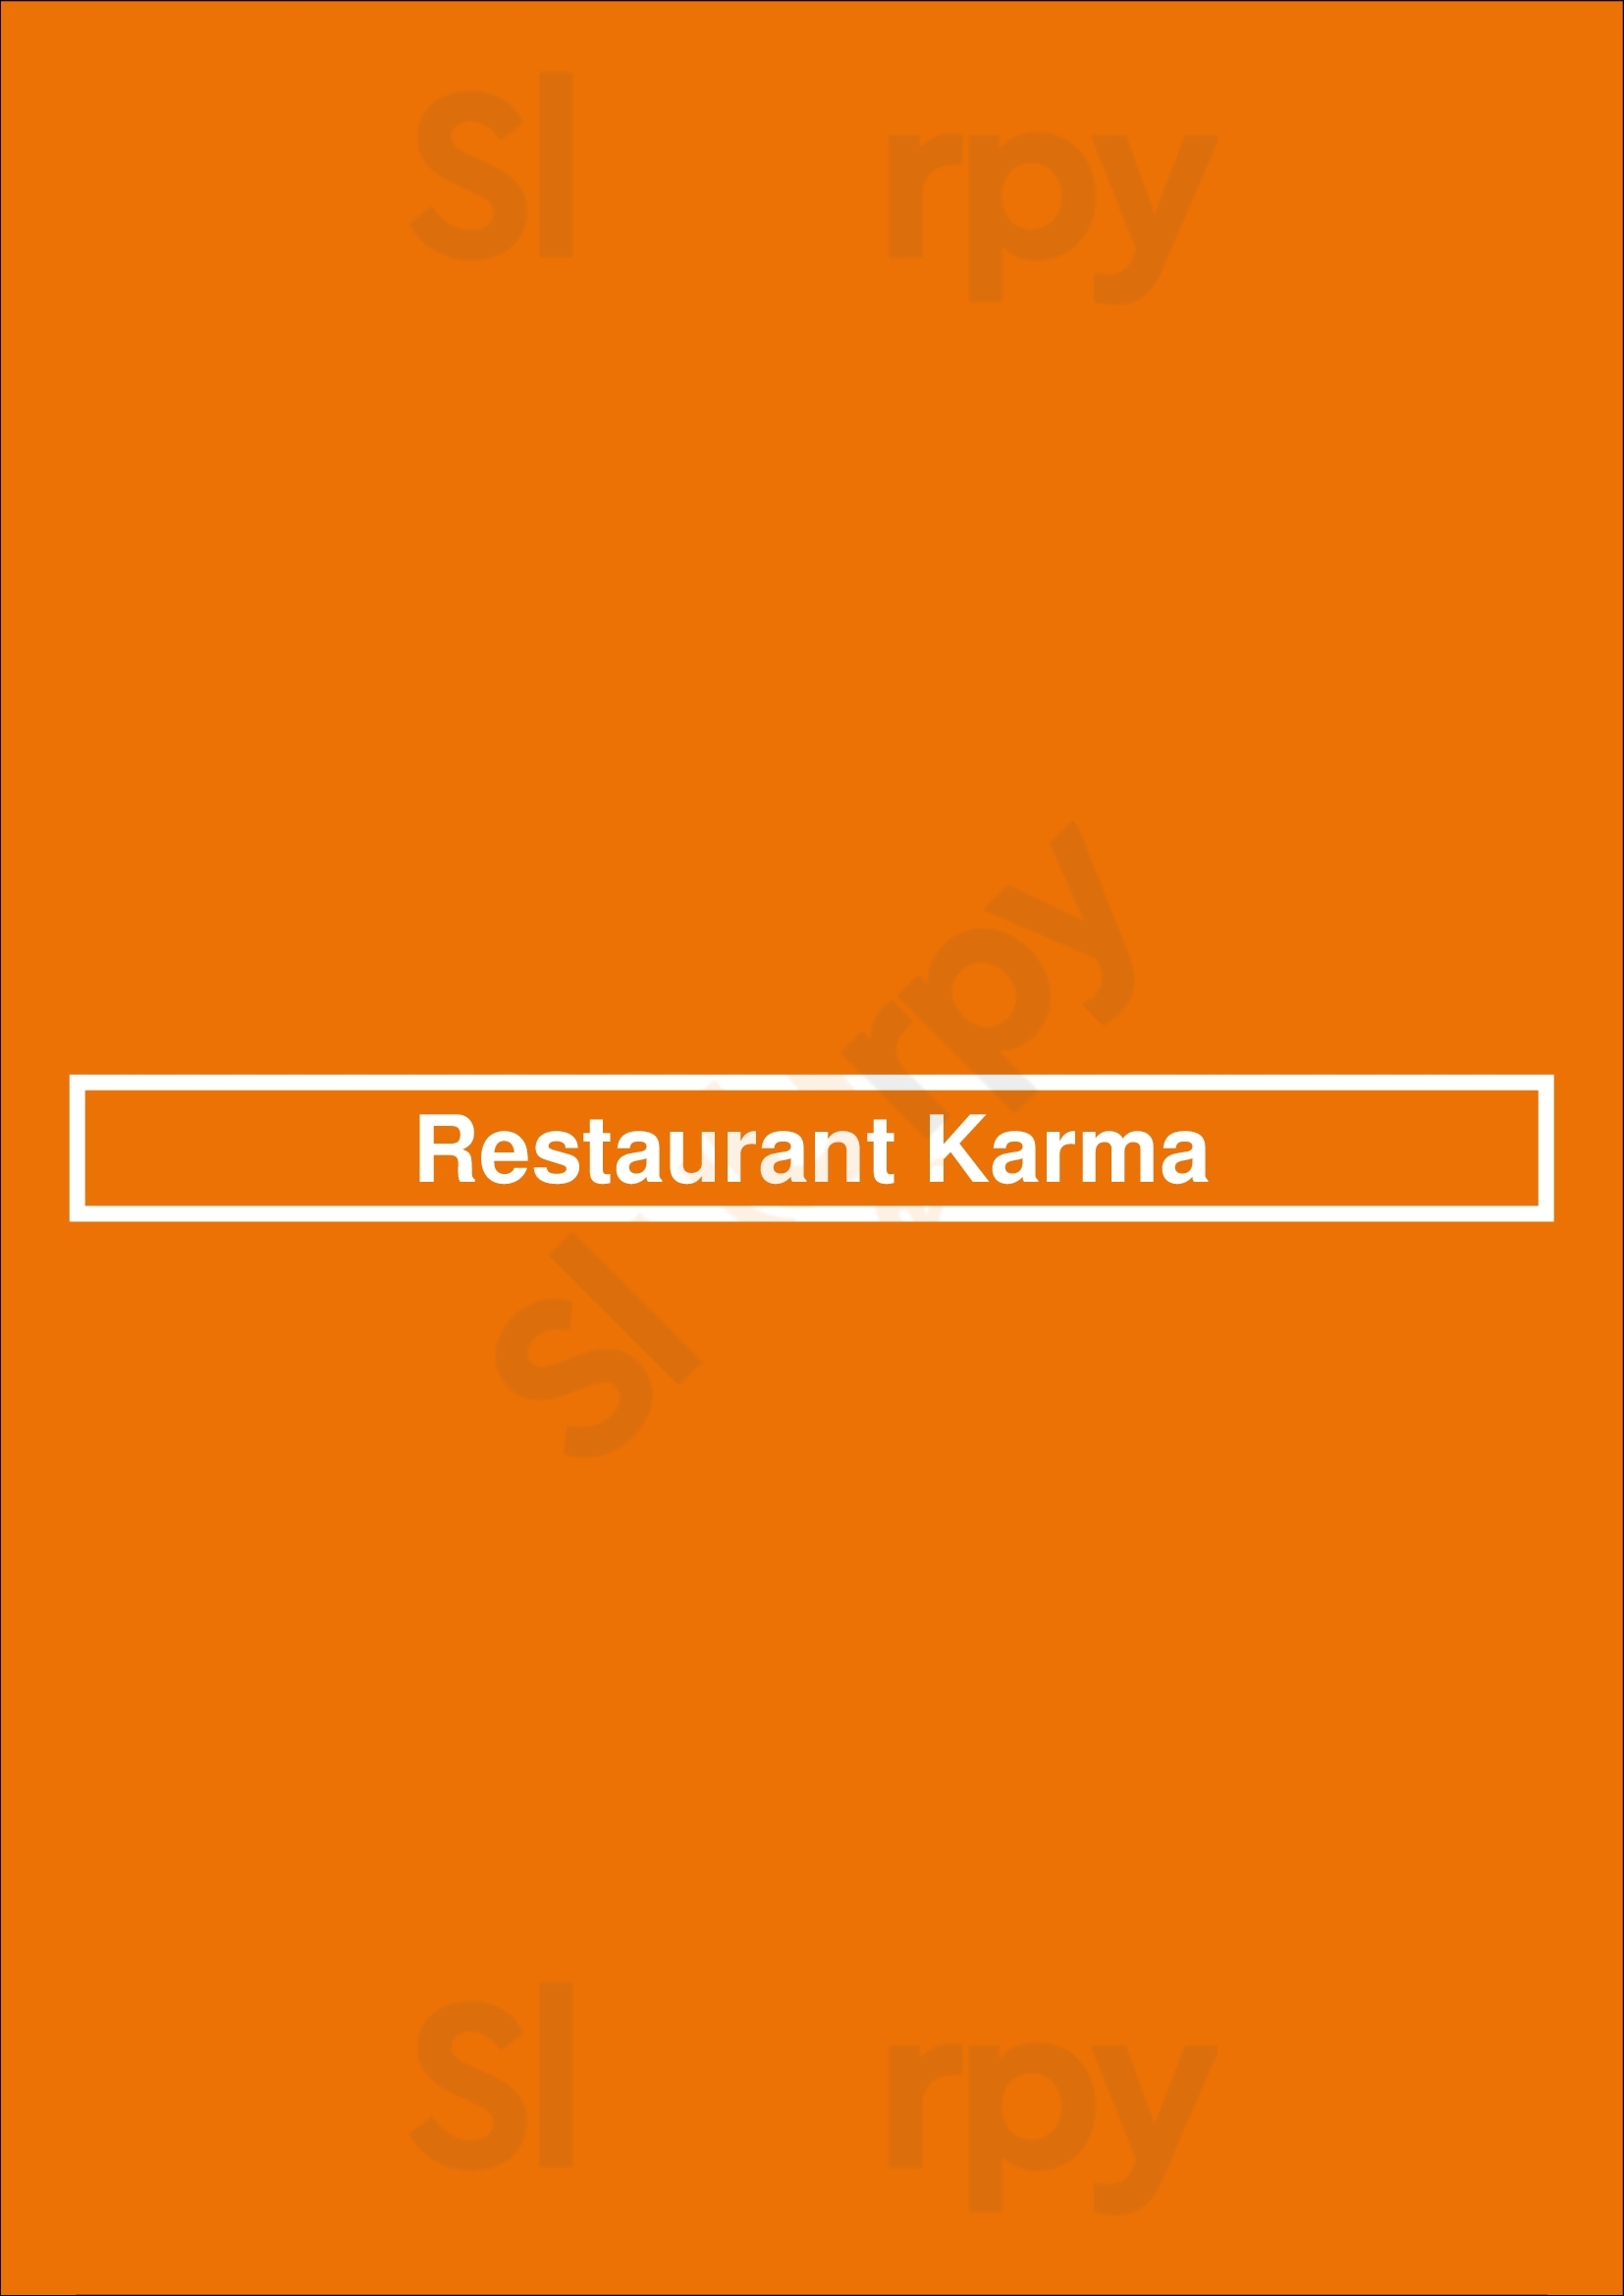 Restaurant Karma Paris Menu - 1